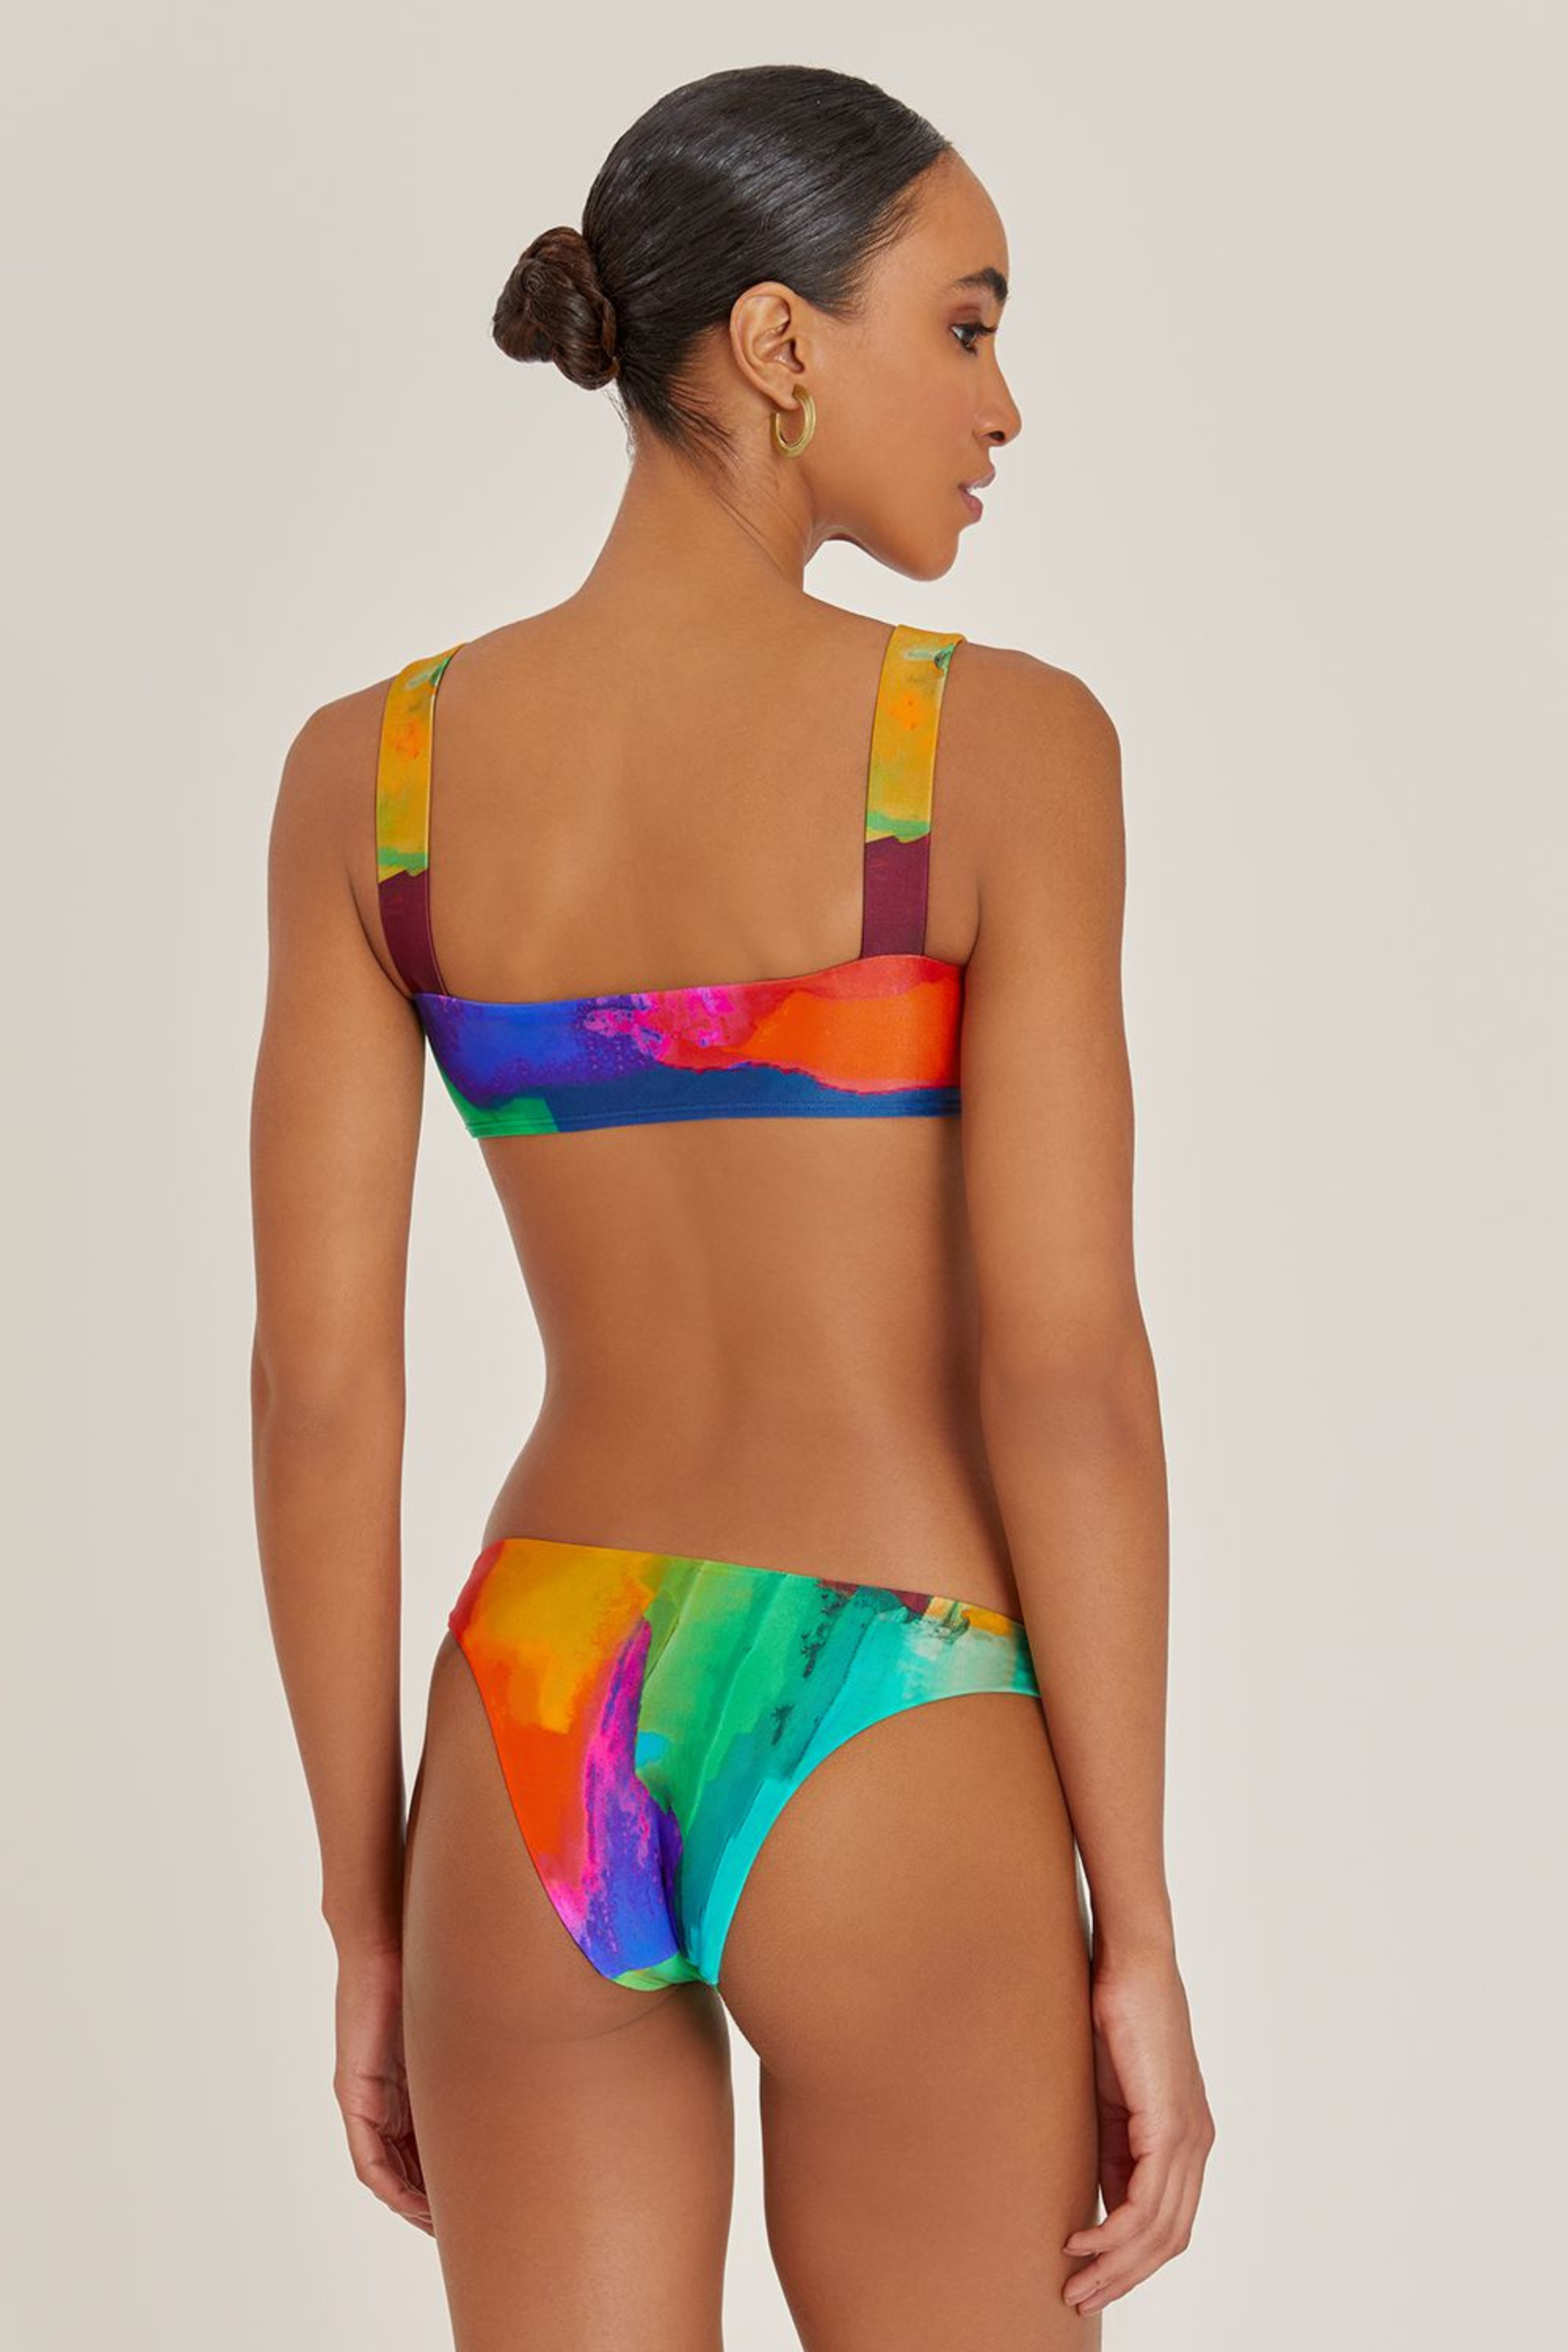 Itaqui Atheletic Bikini - Lenny Niemeyer